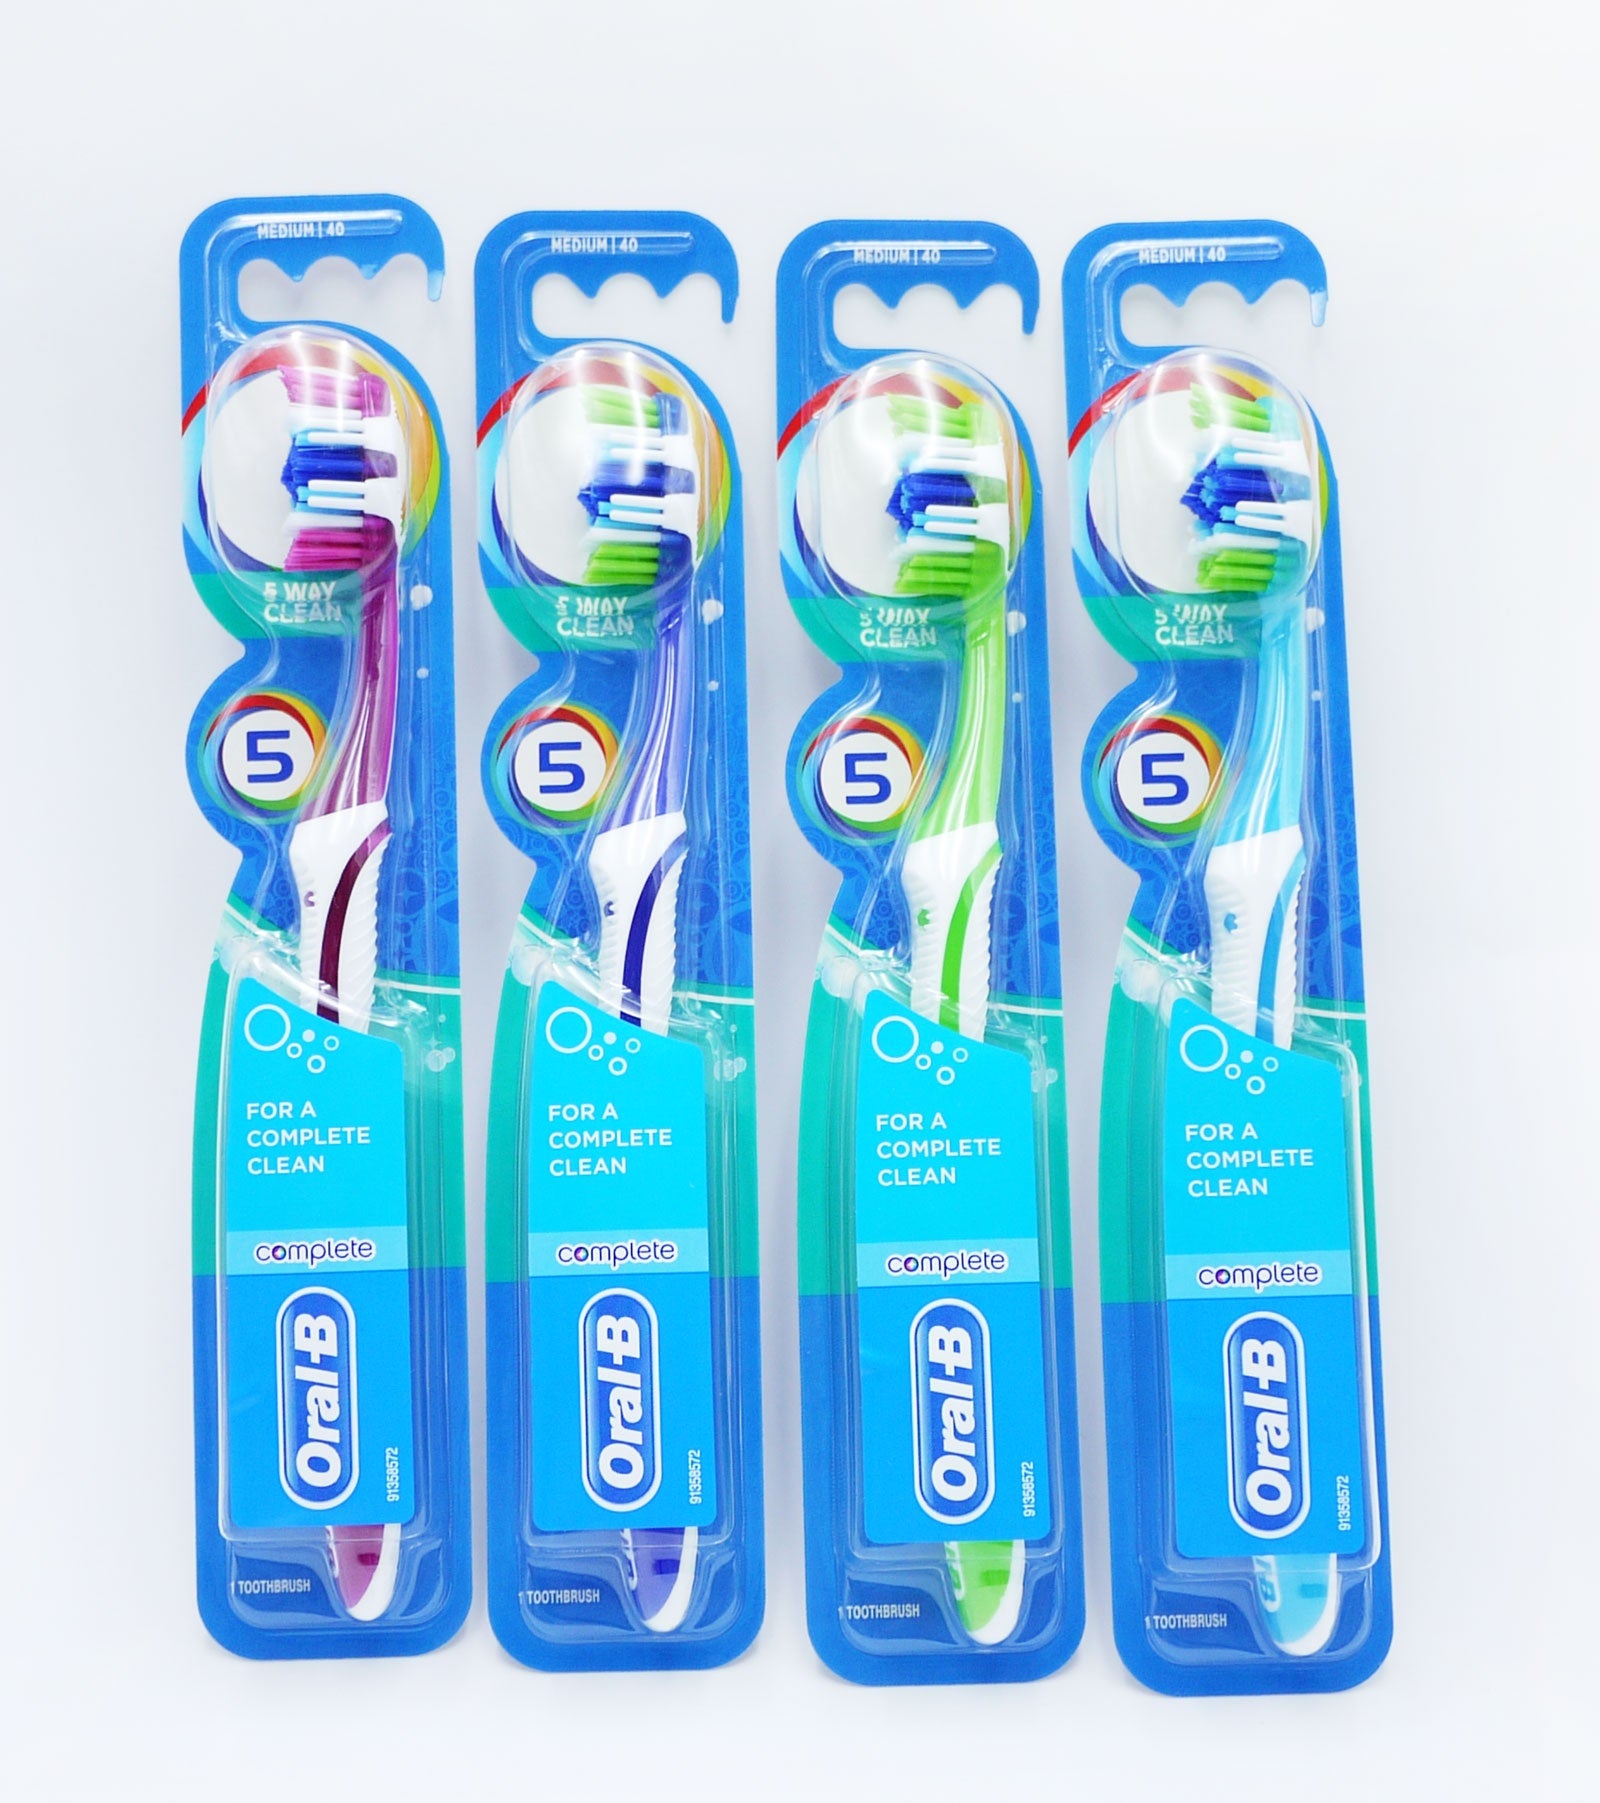 Oral B Complete 5 Way Clean Toothbrush*